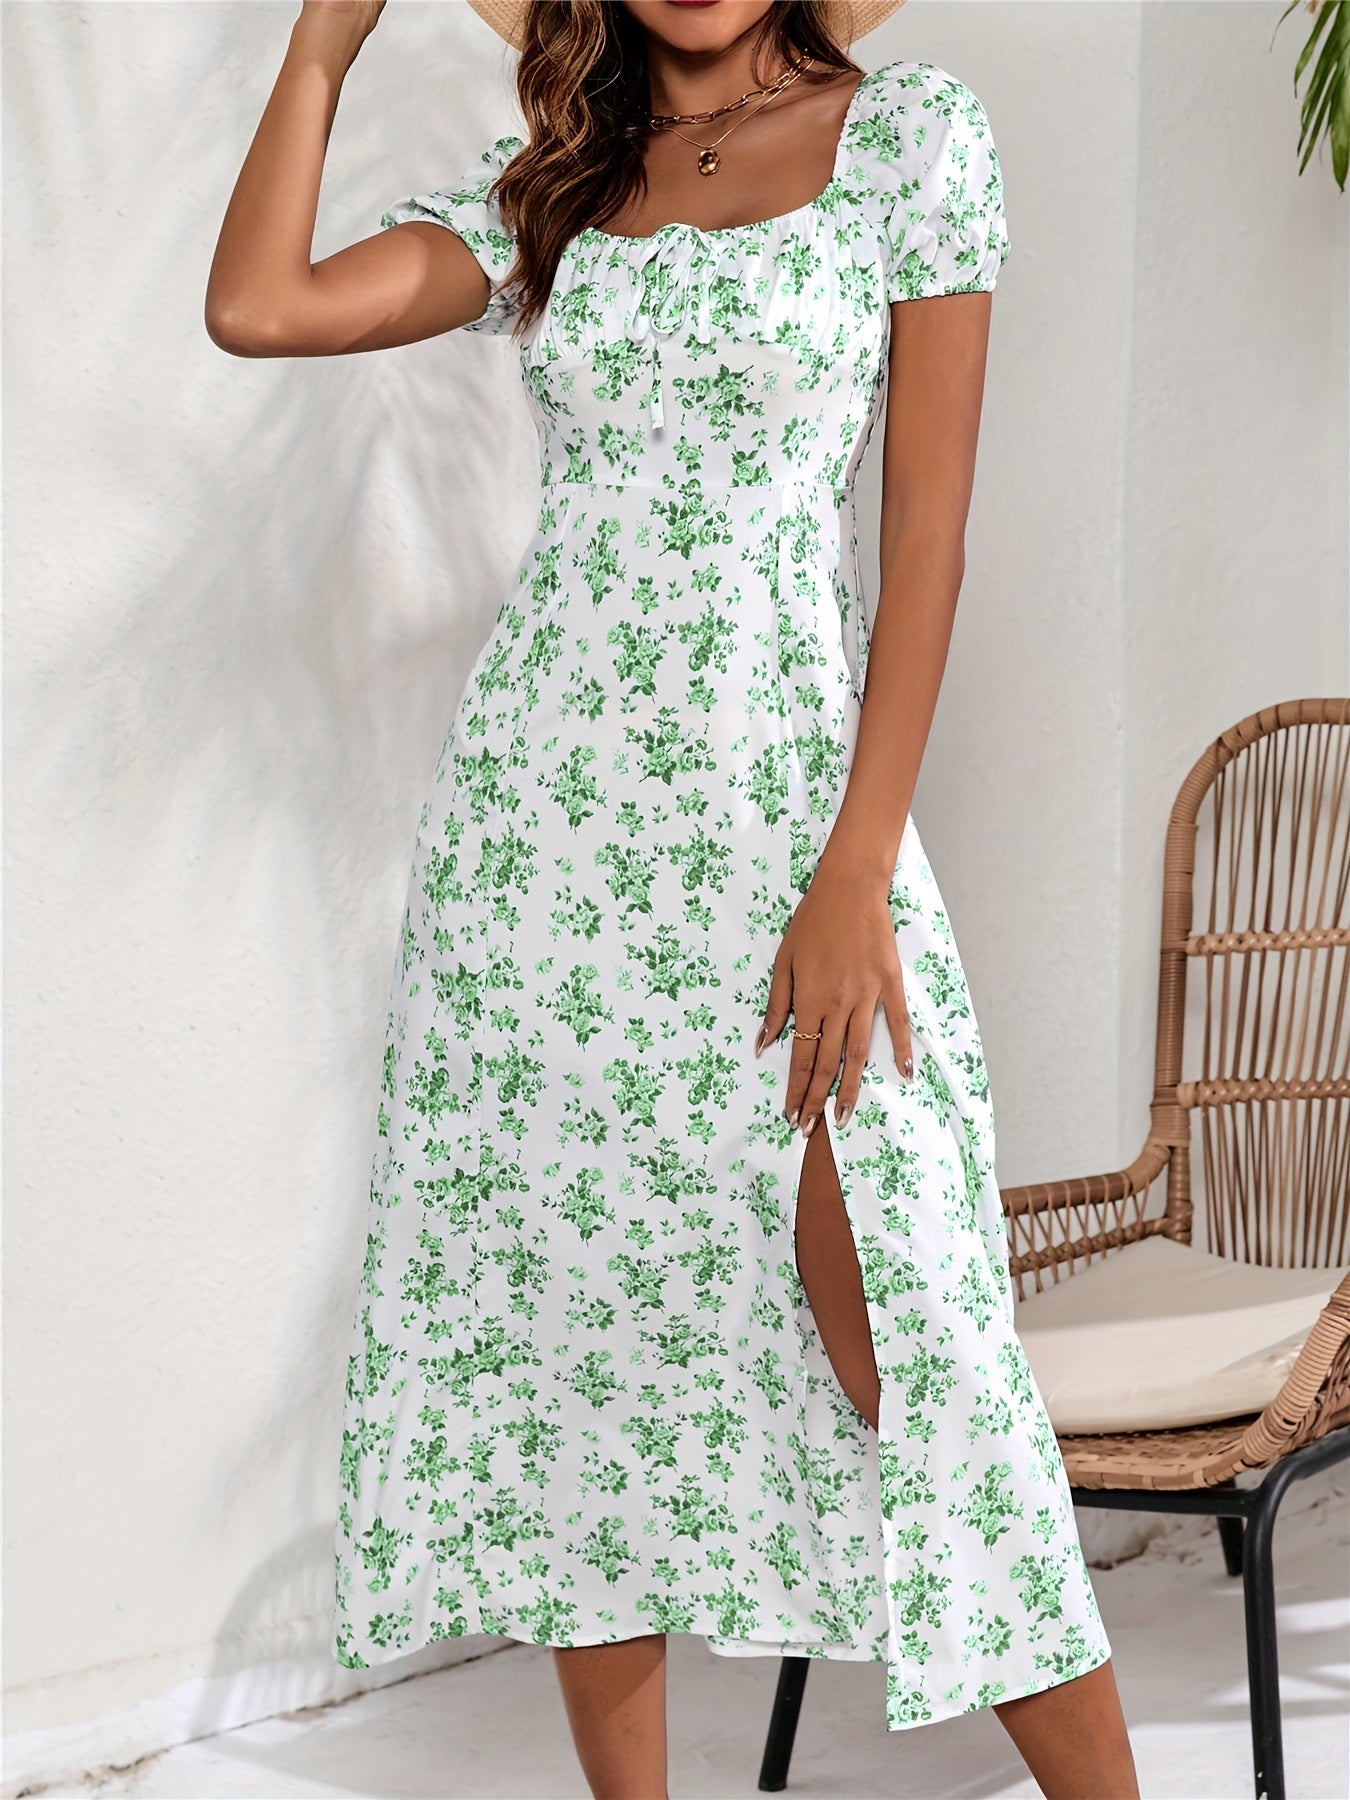 Ditsy Floral Print Side Slit Short Sleeve Dress For Spring & Summer, Women's Clothing